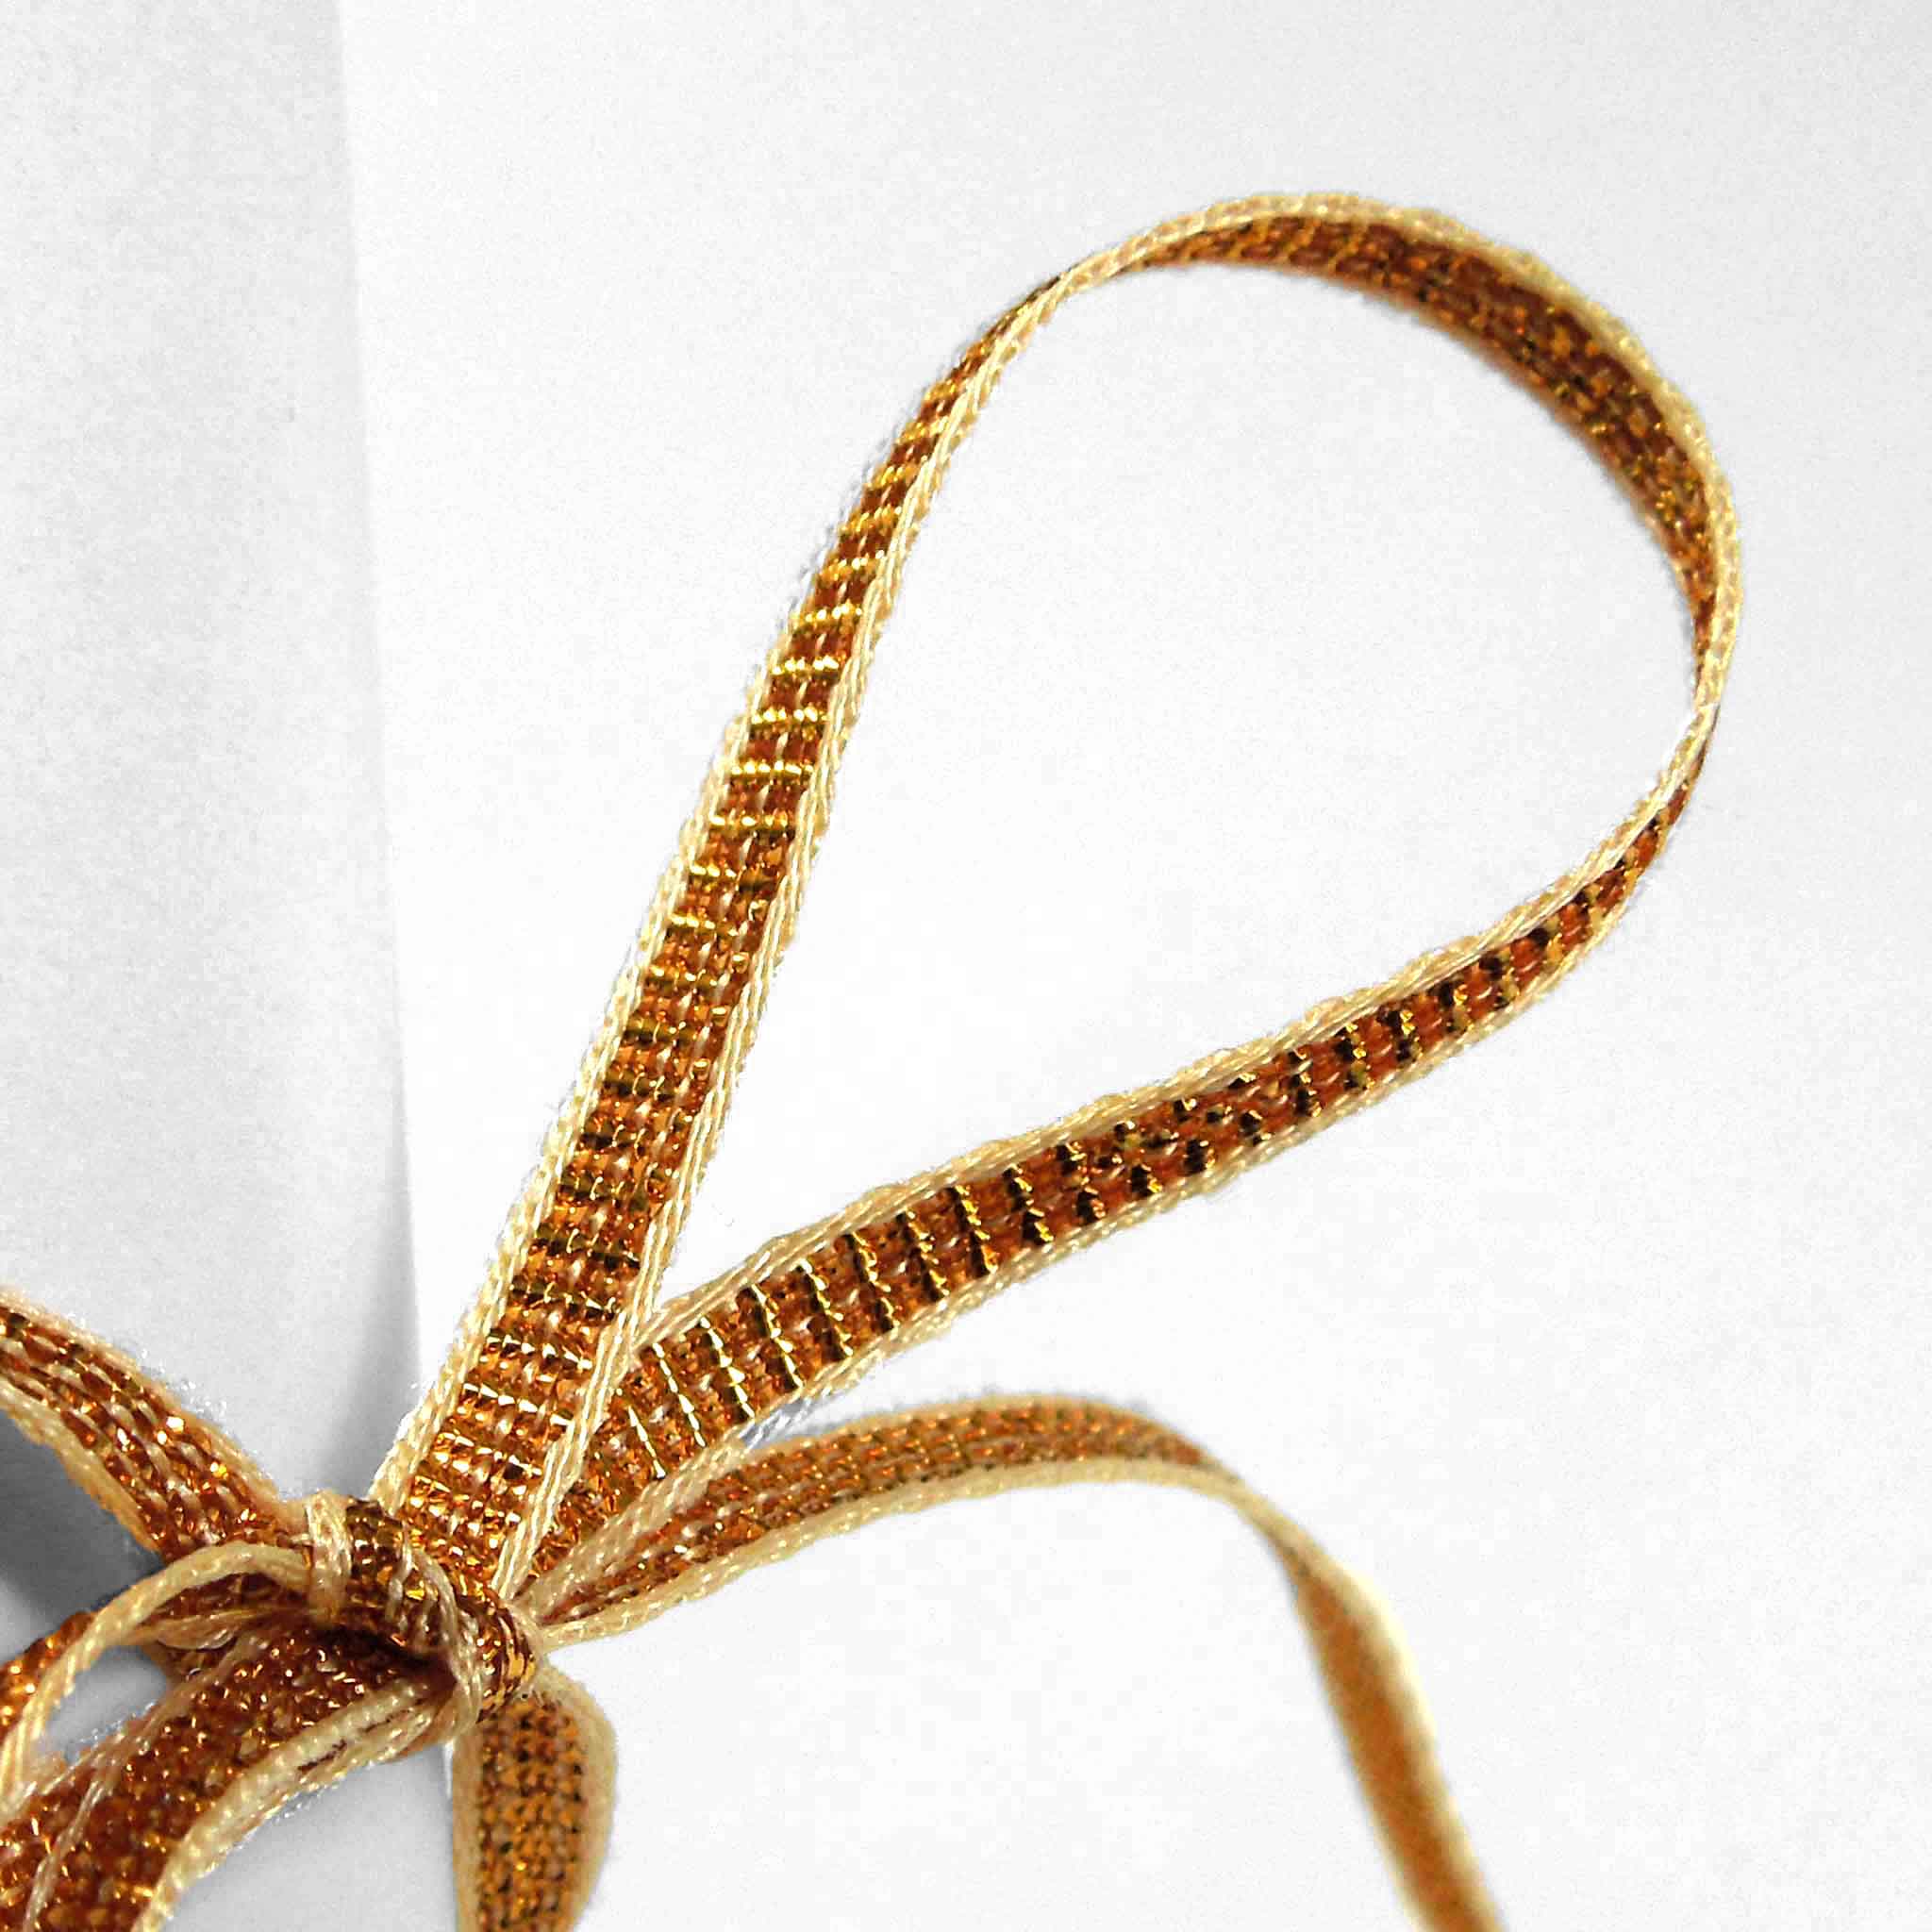 3mm Dragonfly Metallic Ribbon - Gold on Gold - Berisfords